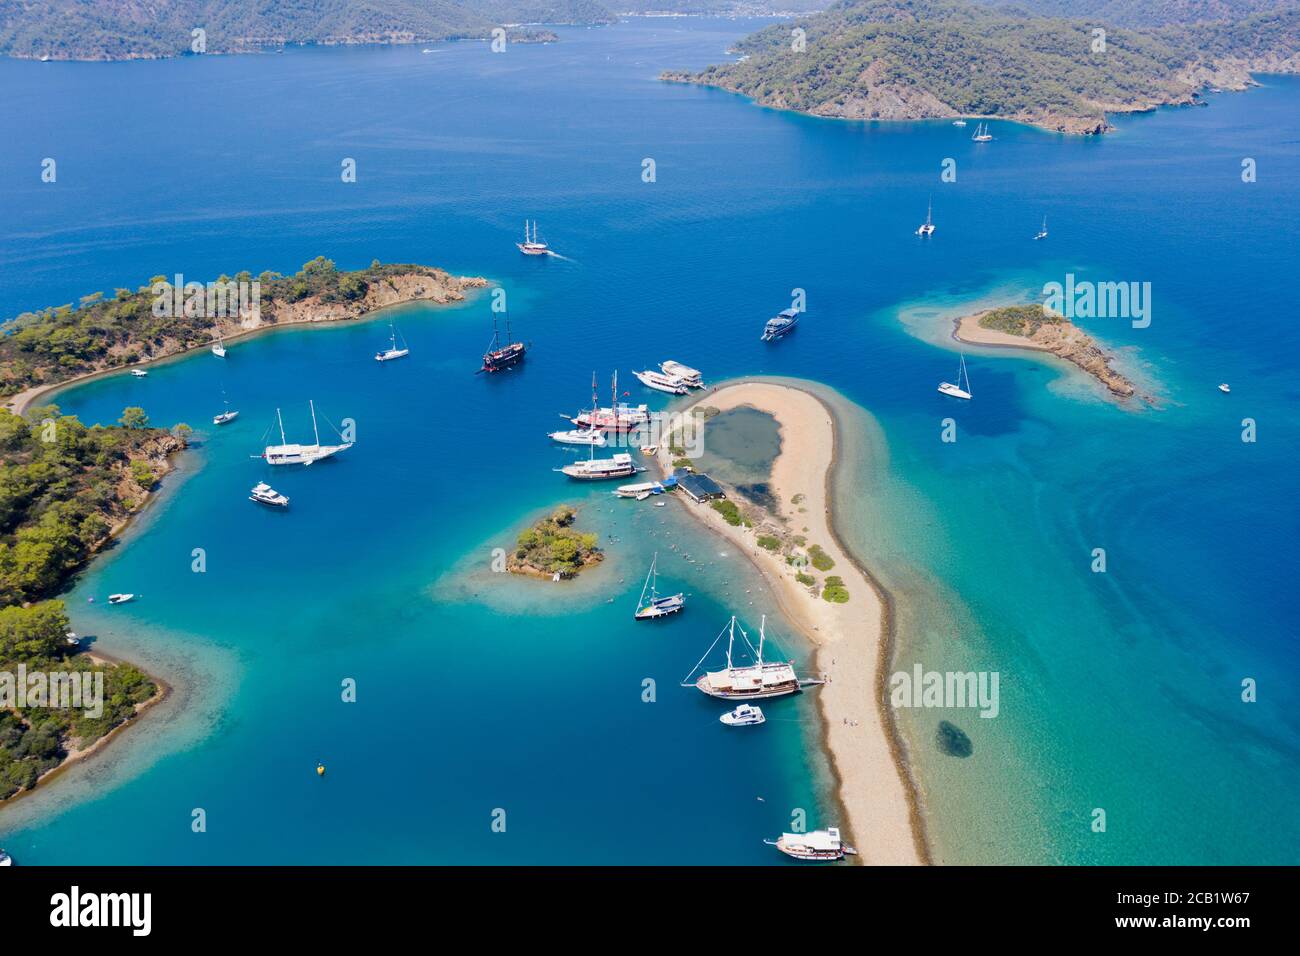 Veduta aerea delle Isole Yassıca di Gocek Fethiye Turchia. Foto Stock